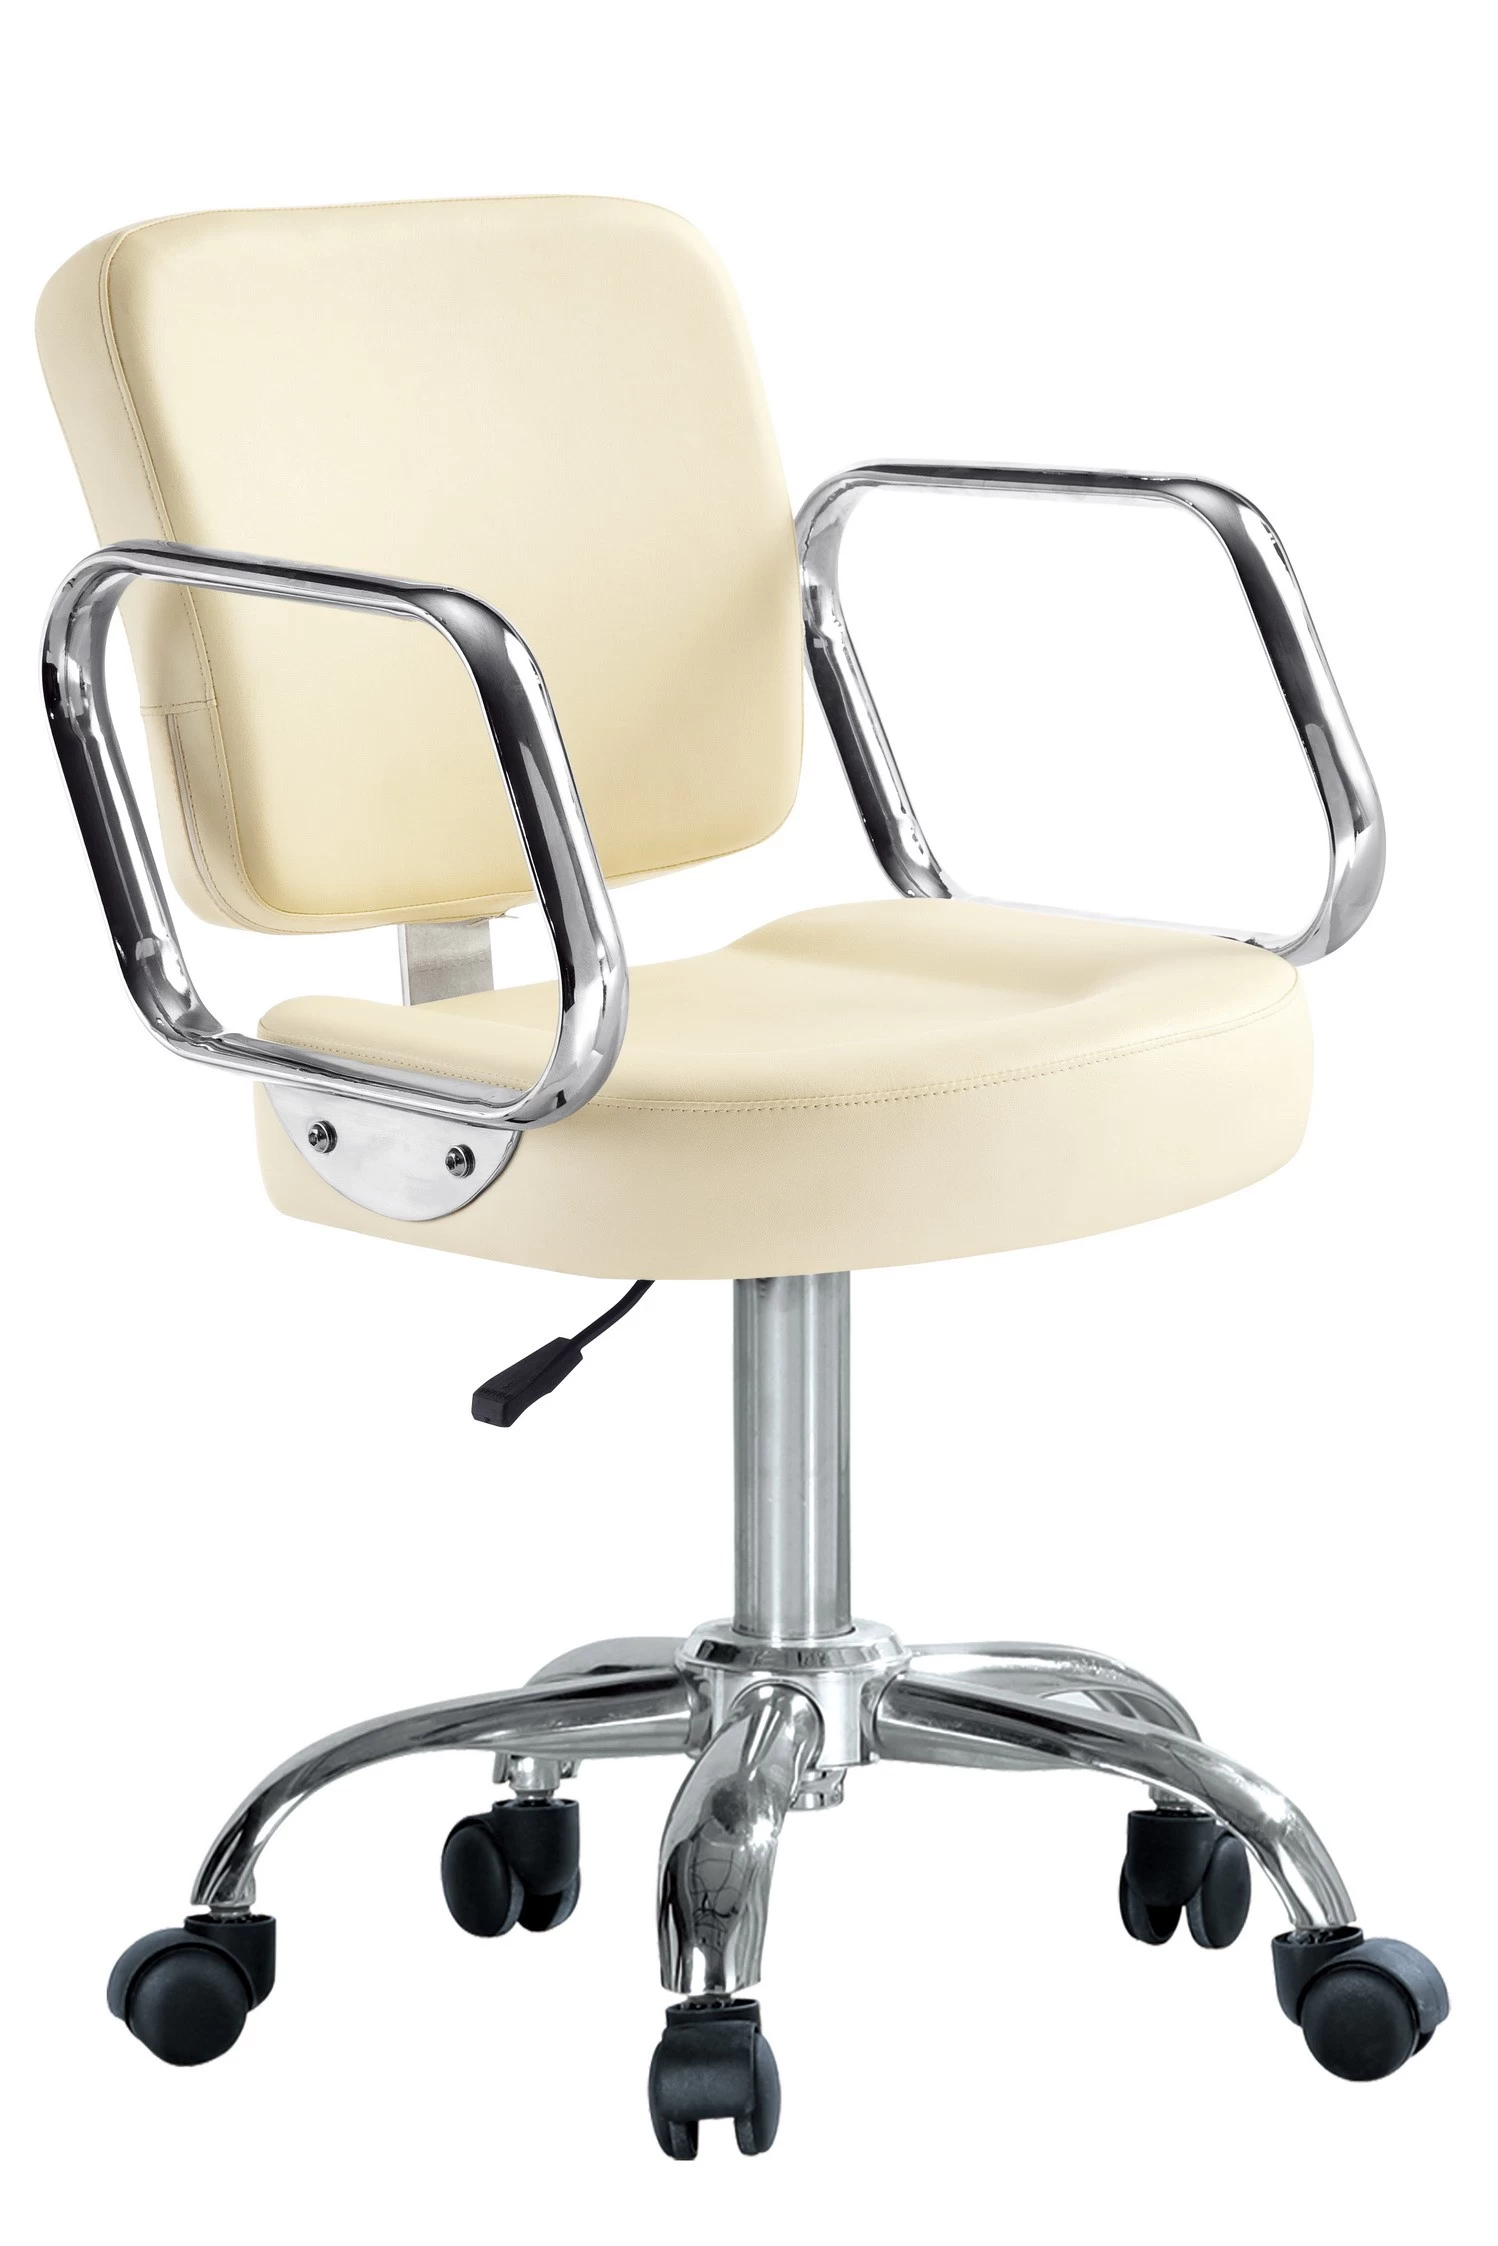  Pedicure technician chair spa salon pedicure chair latest nail technician chairs